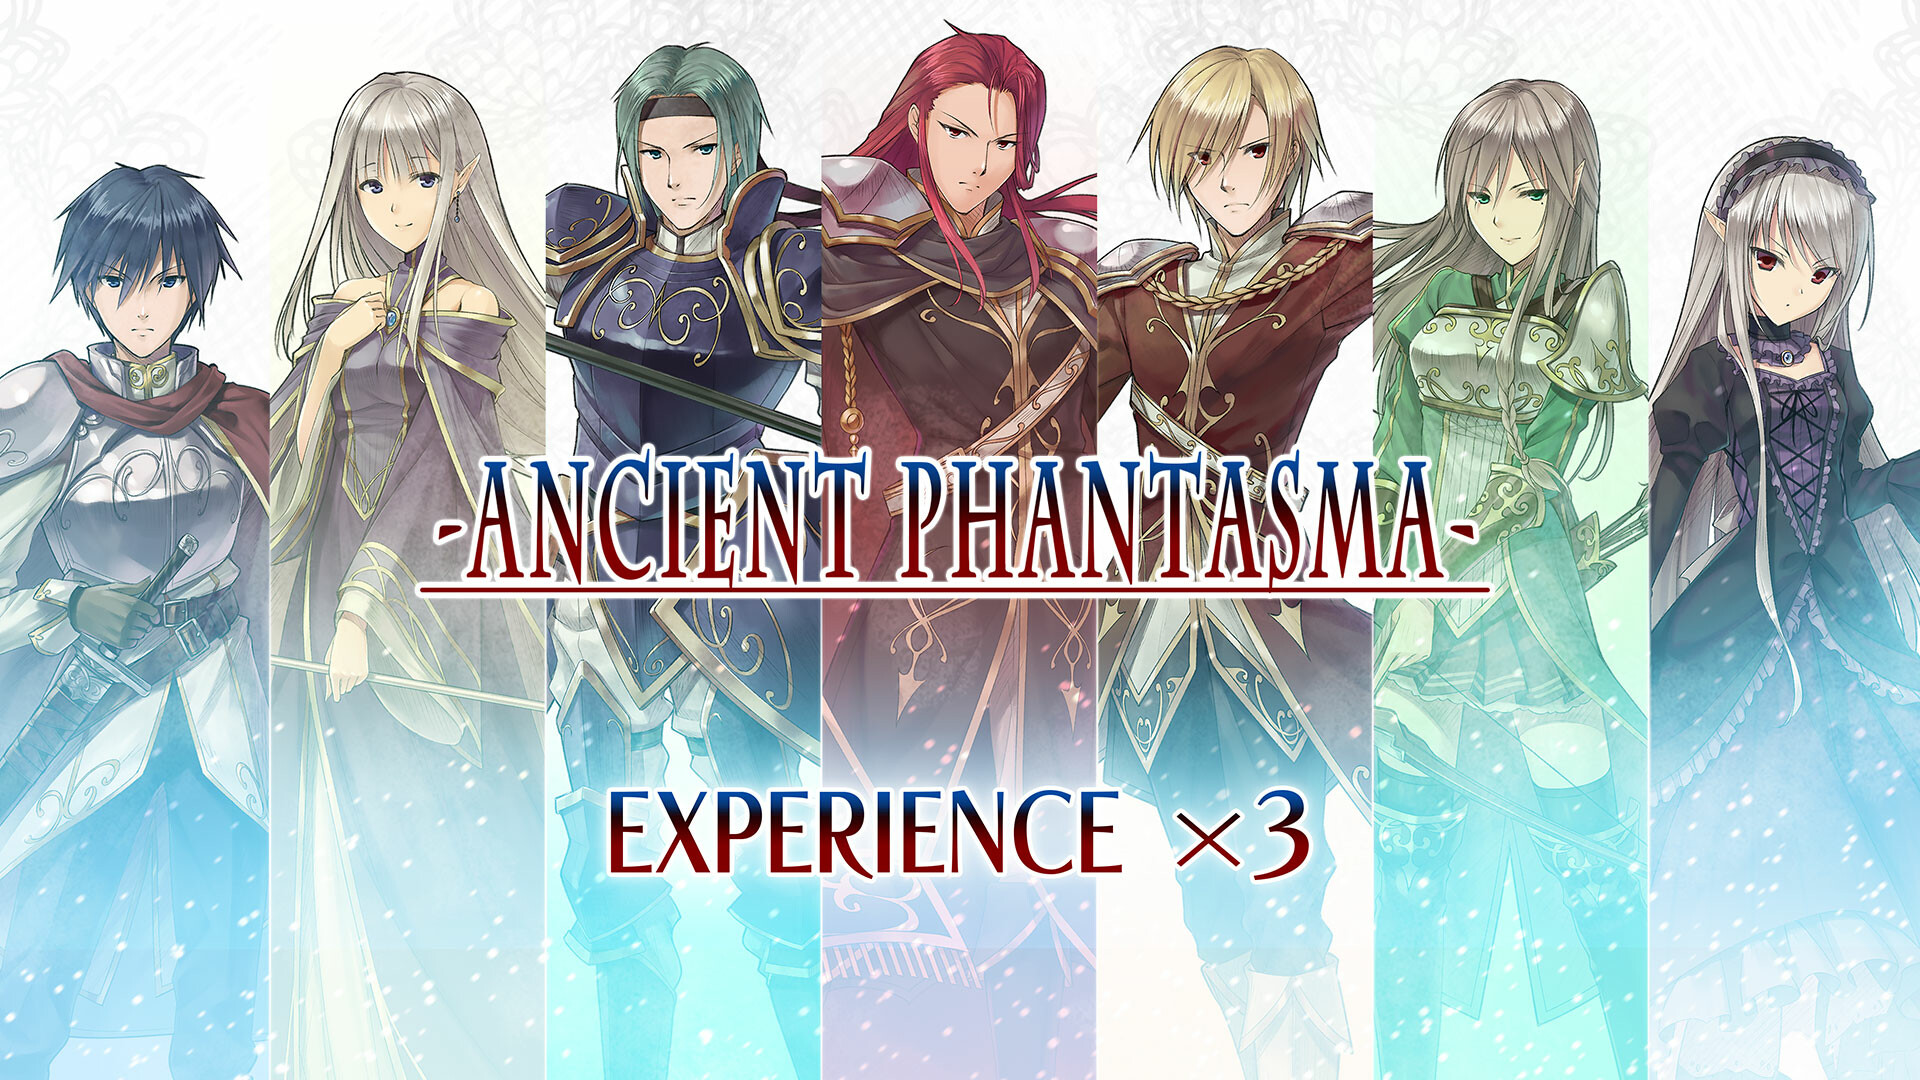 Experience x3 - Ancient Phantasma Featured Screenshot #1